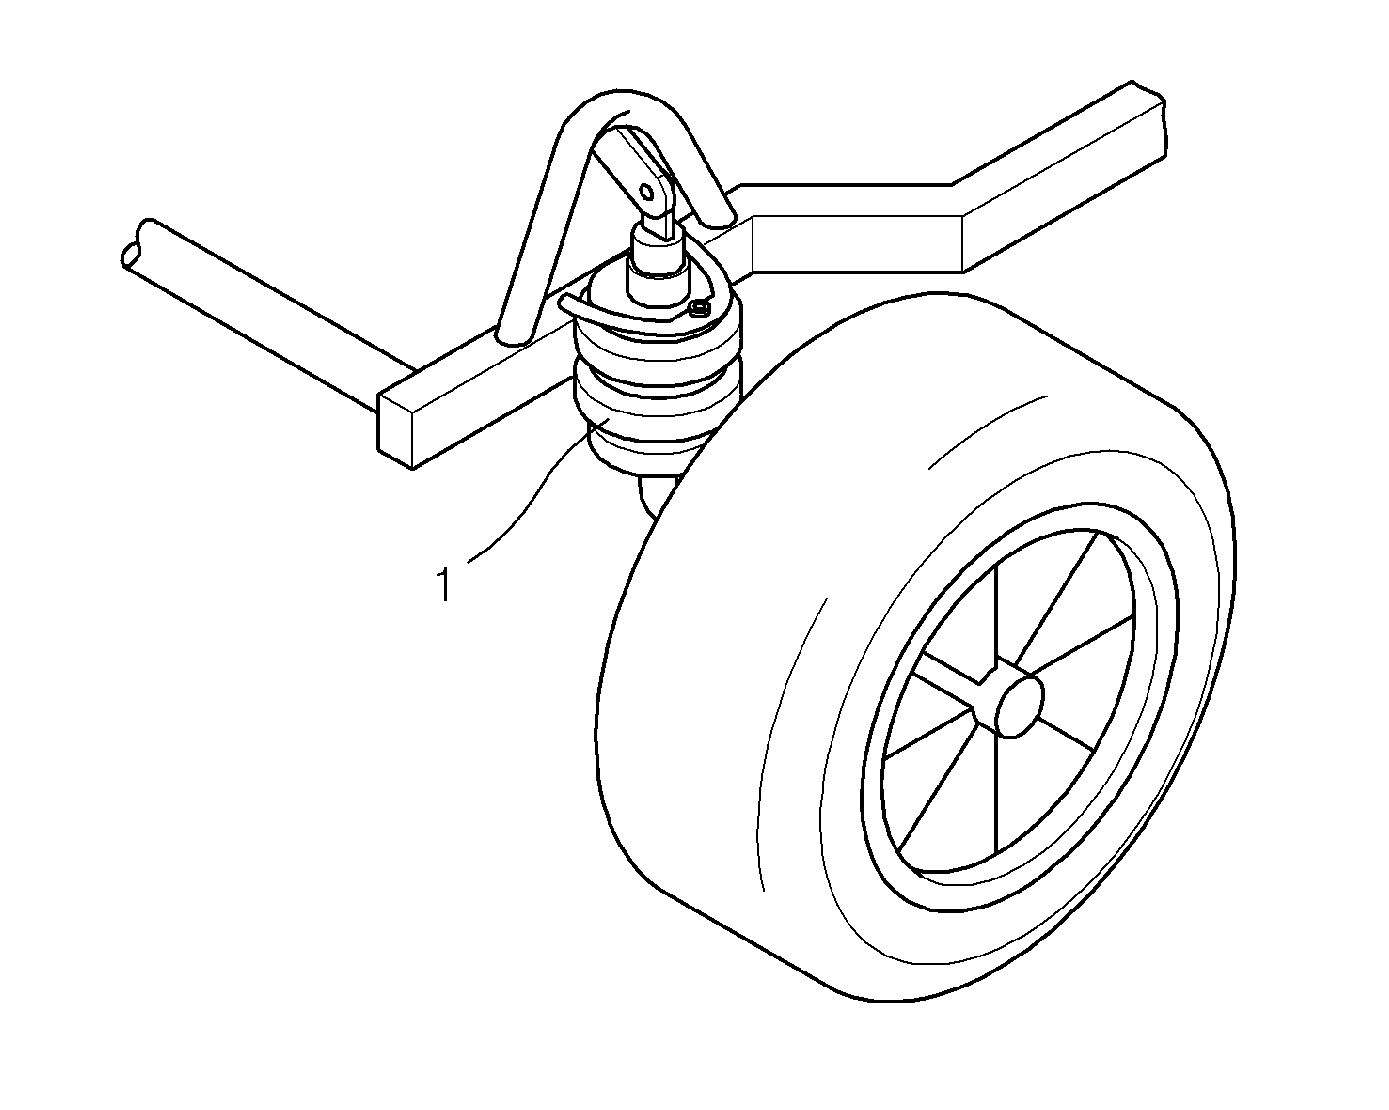 Arm-wheel type robotic vehicle comprising suspension system